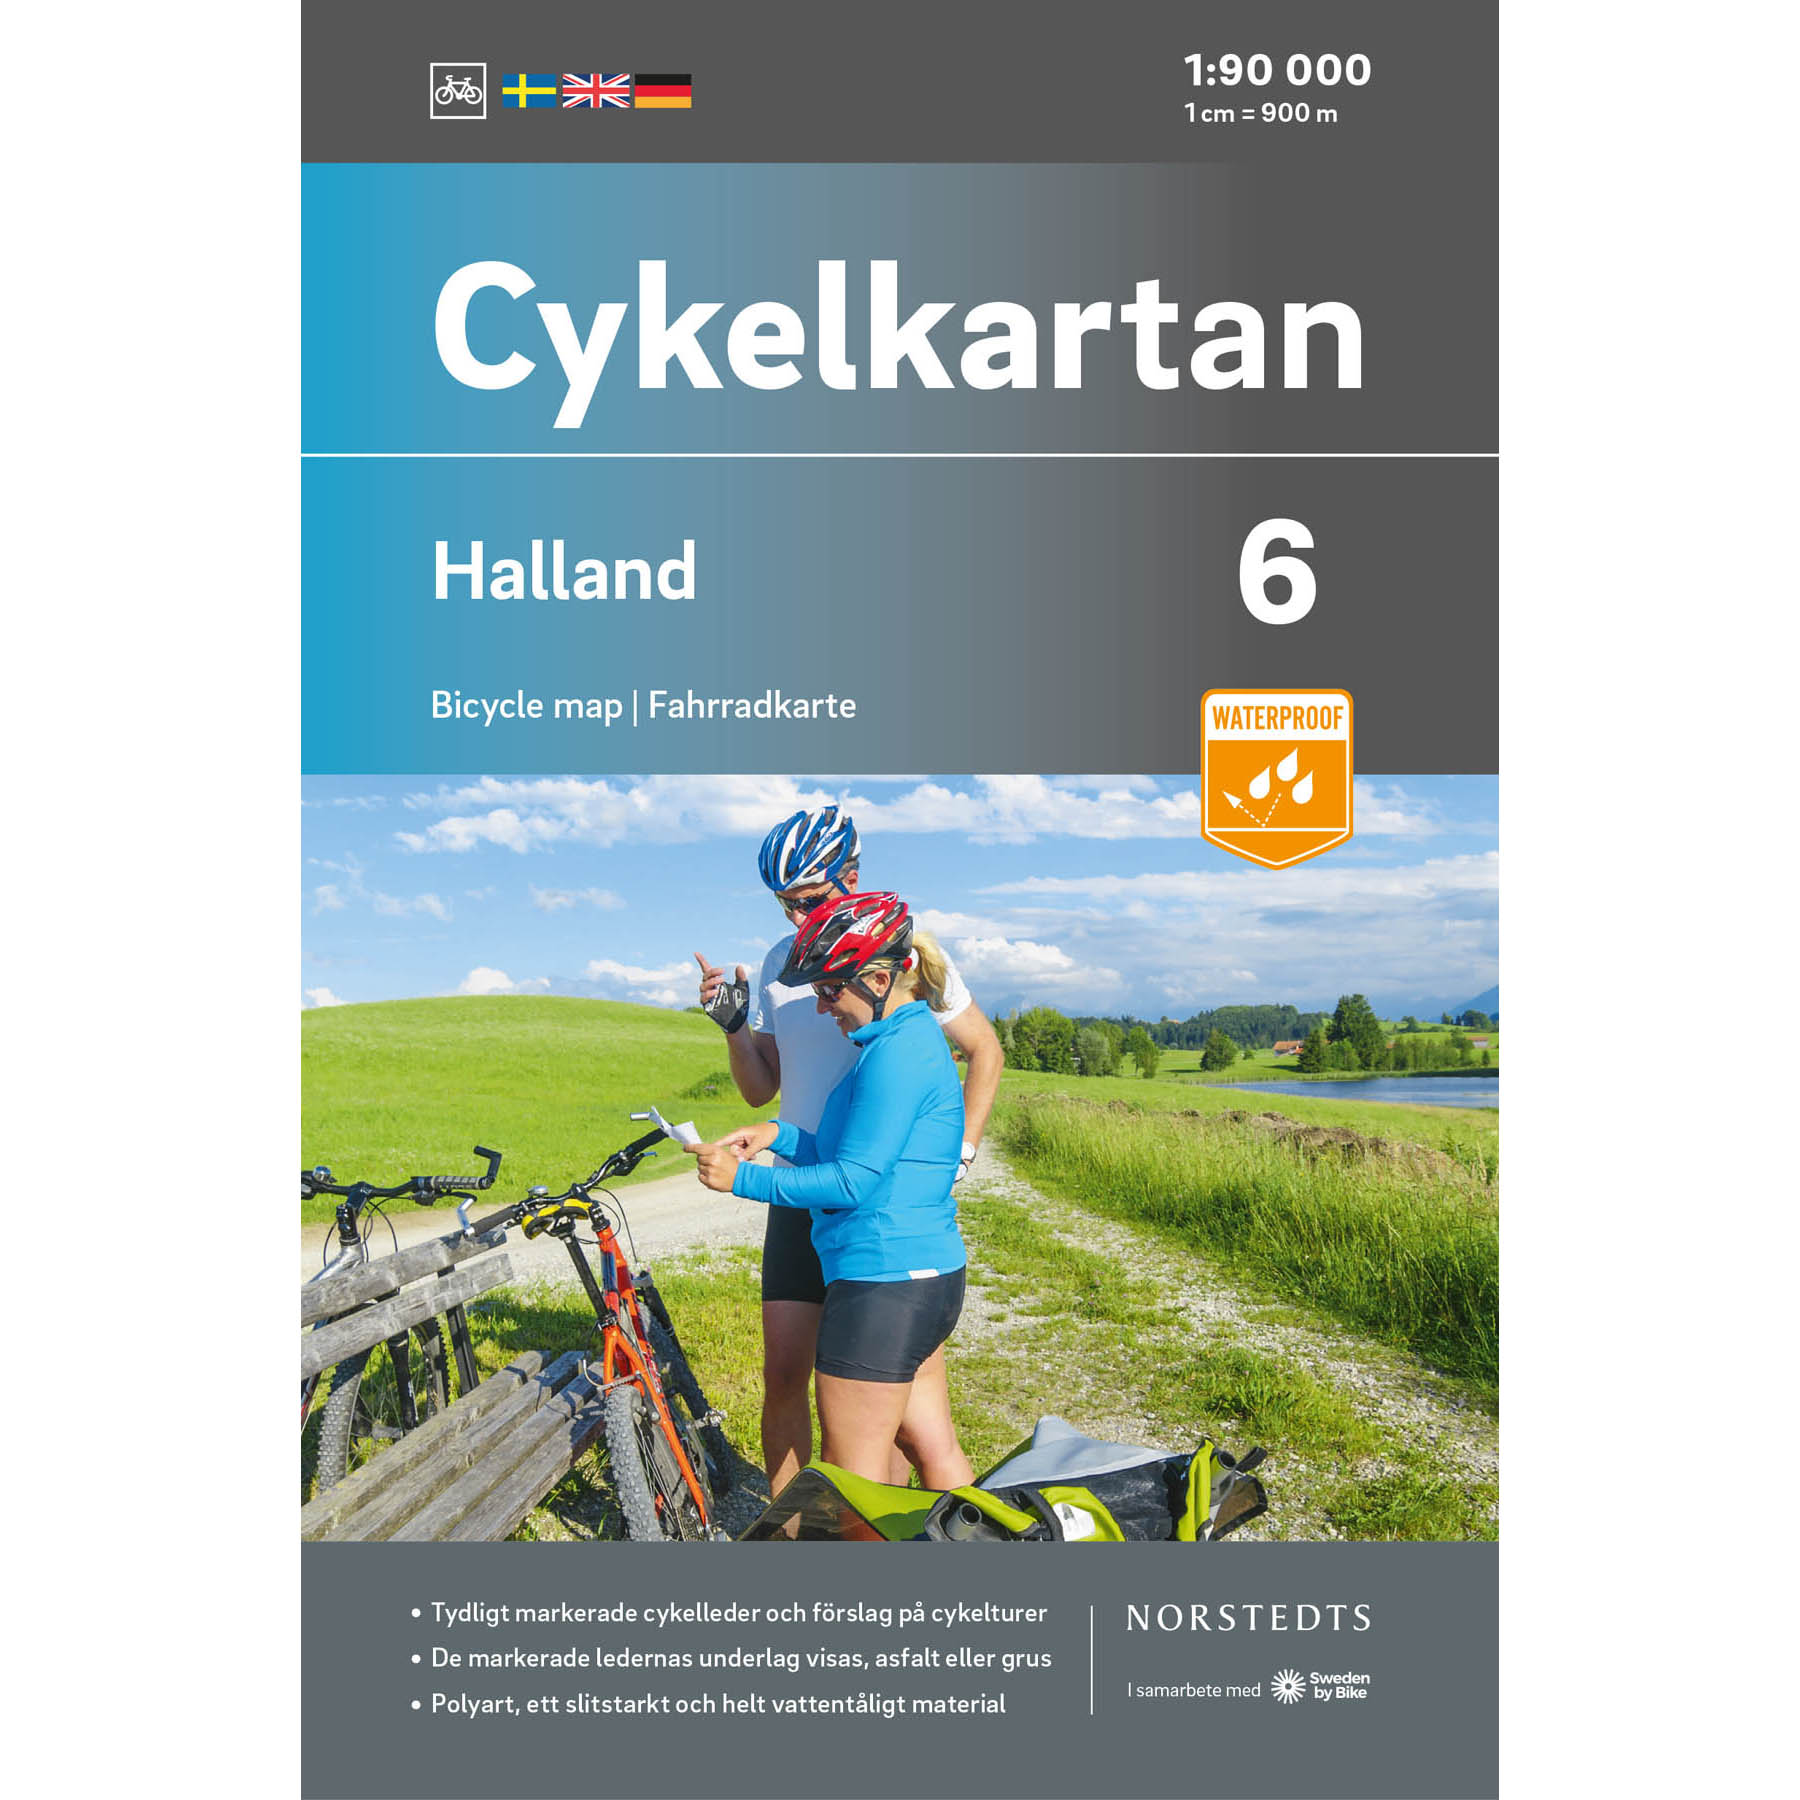 Cykelkarta Halland - Varberg - Halmstad - Sweden by Bike